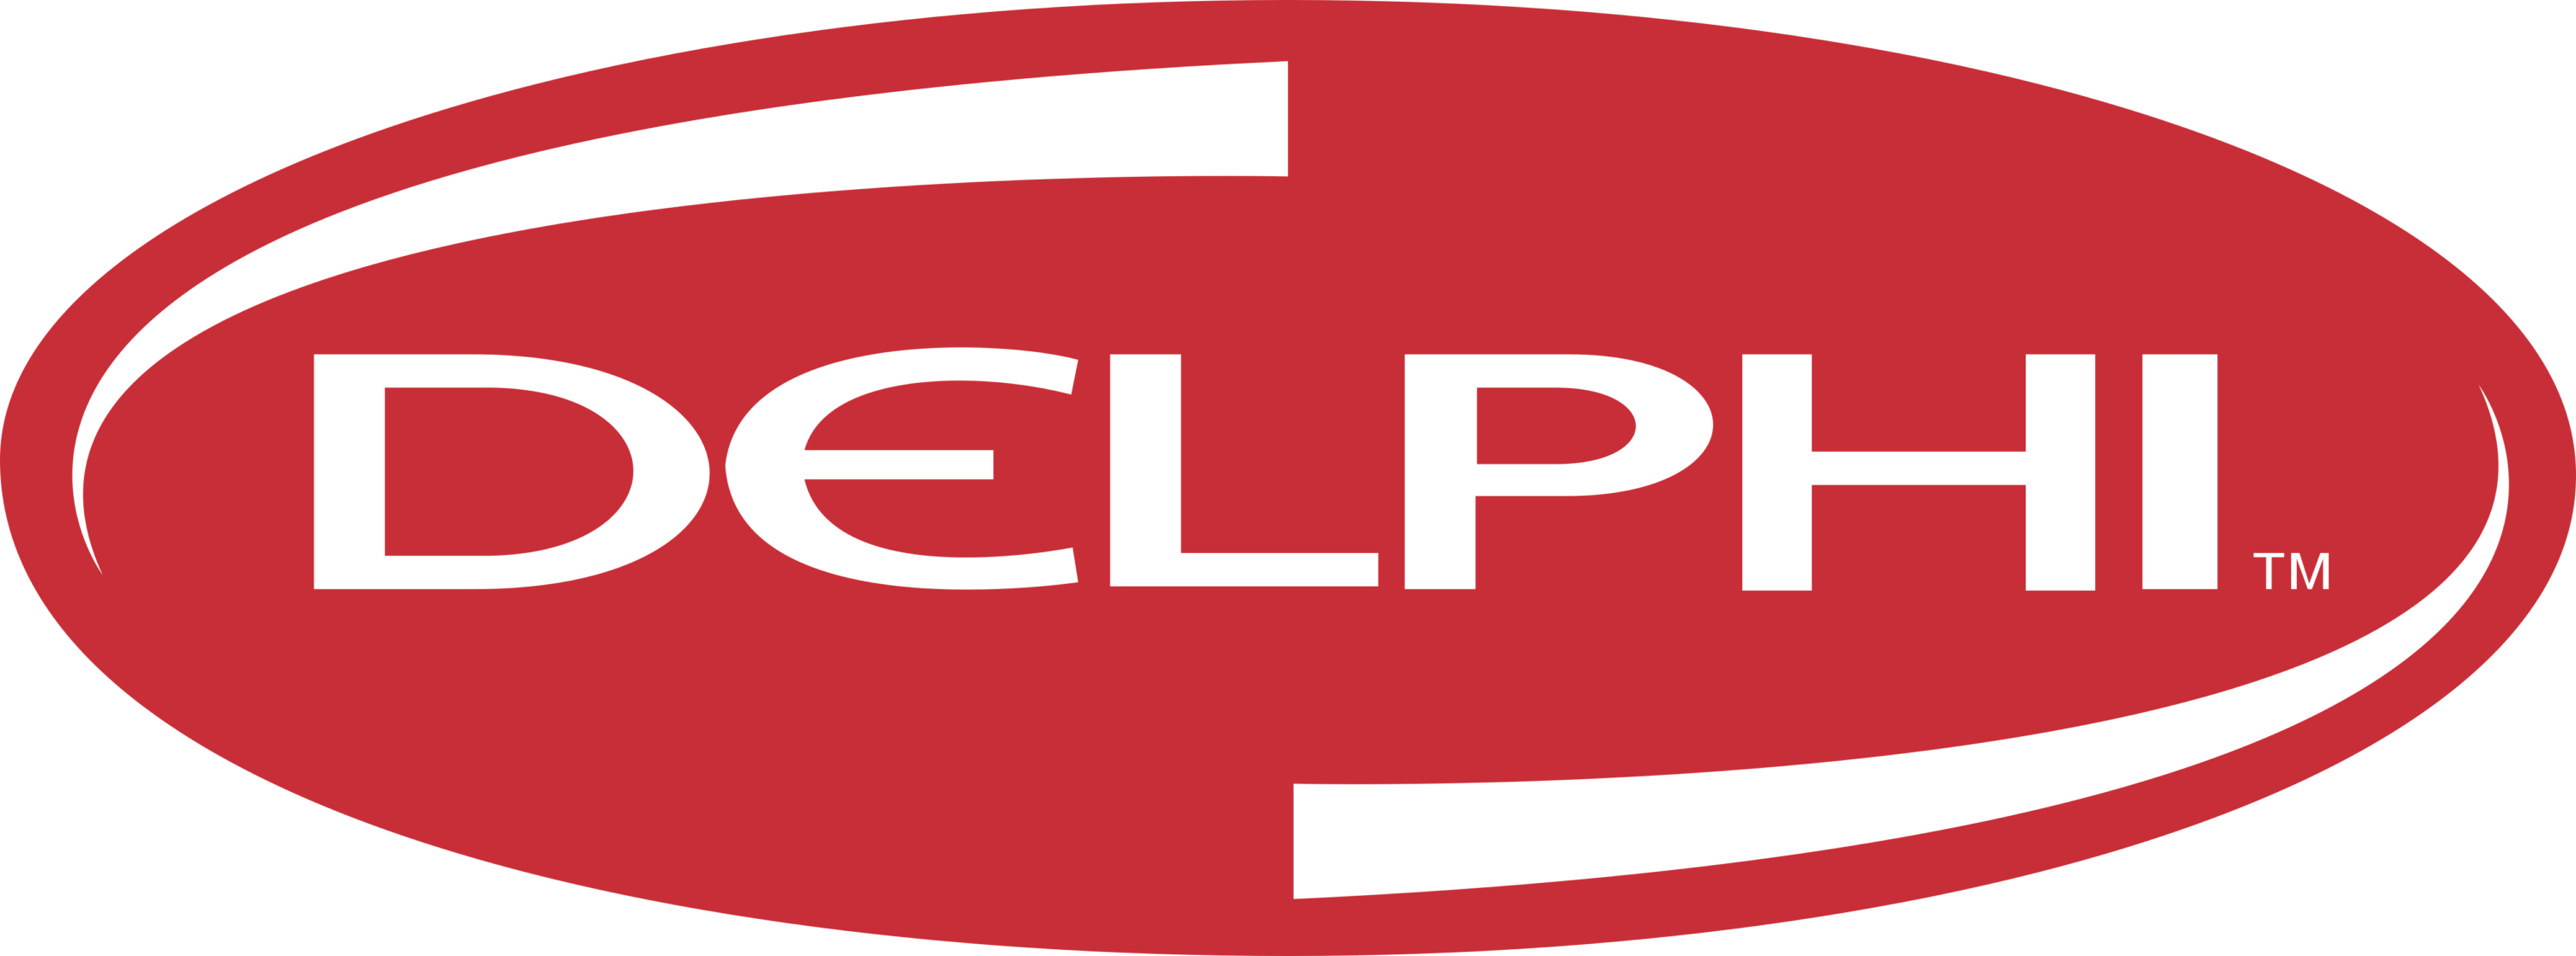 Delphi Logo red